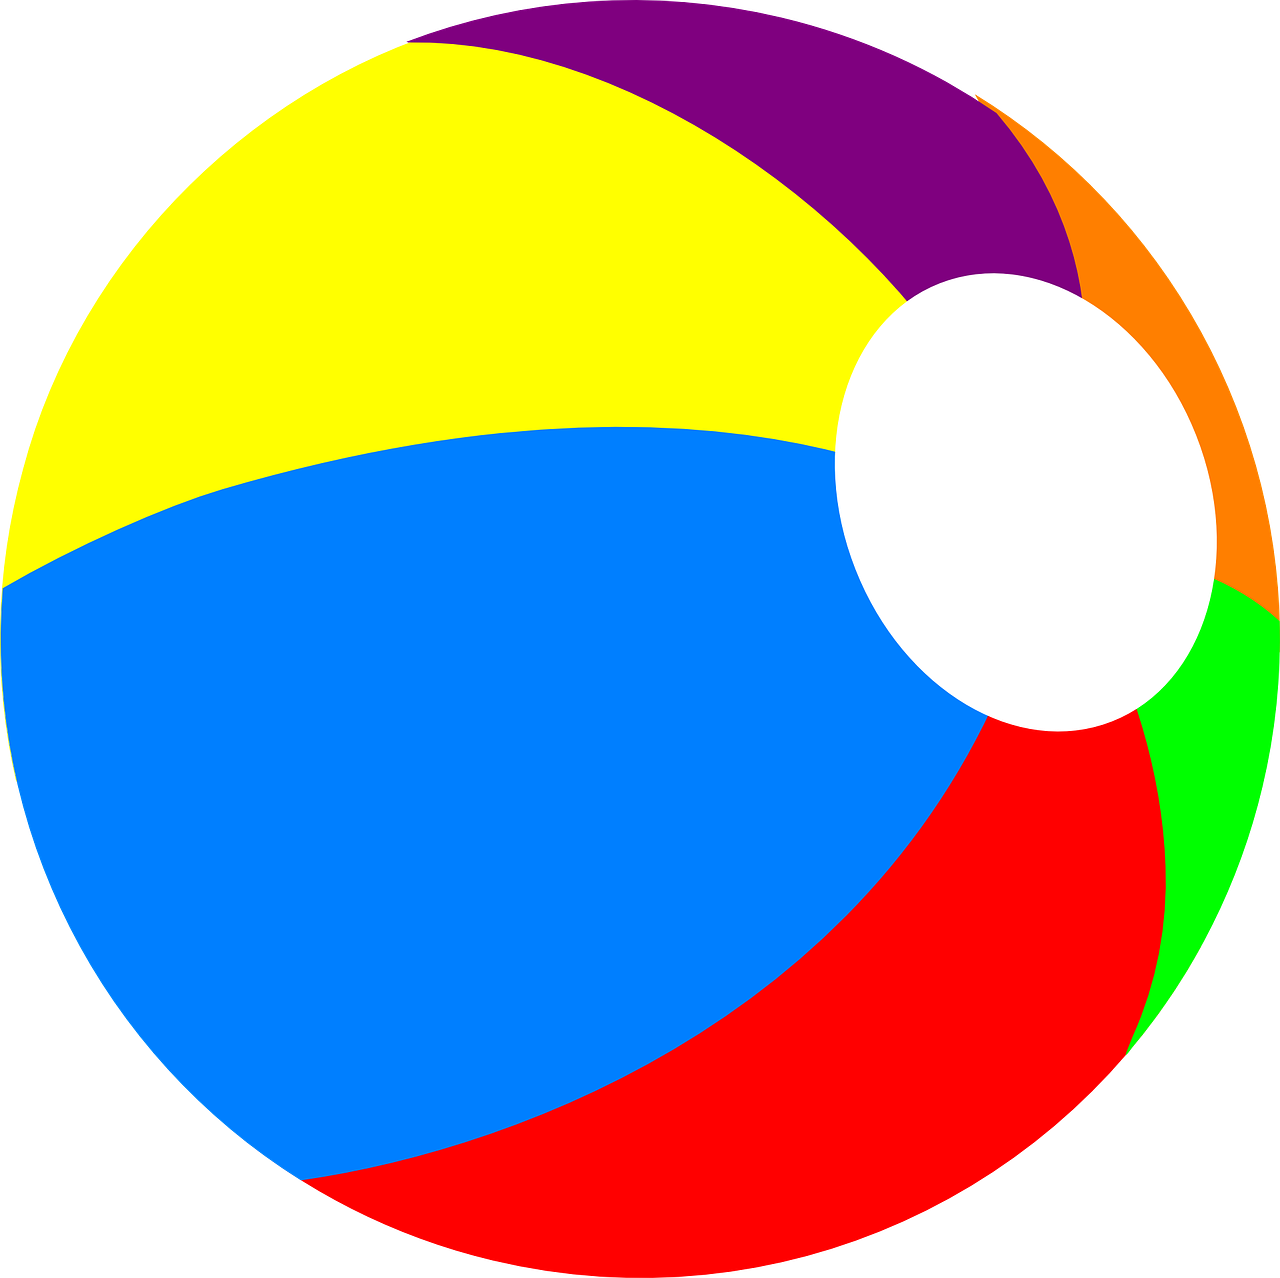 A Colorful Beach Ball With A White Circle